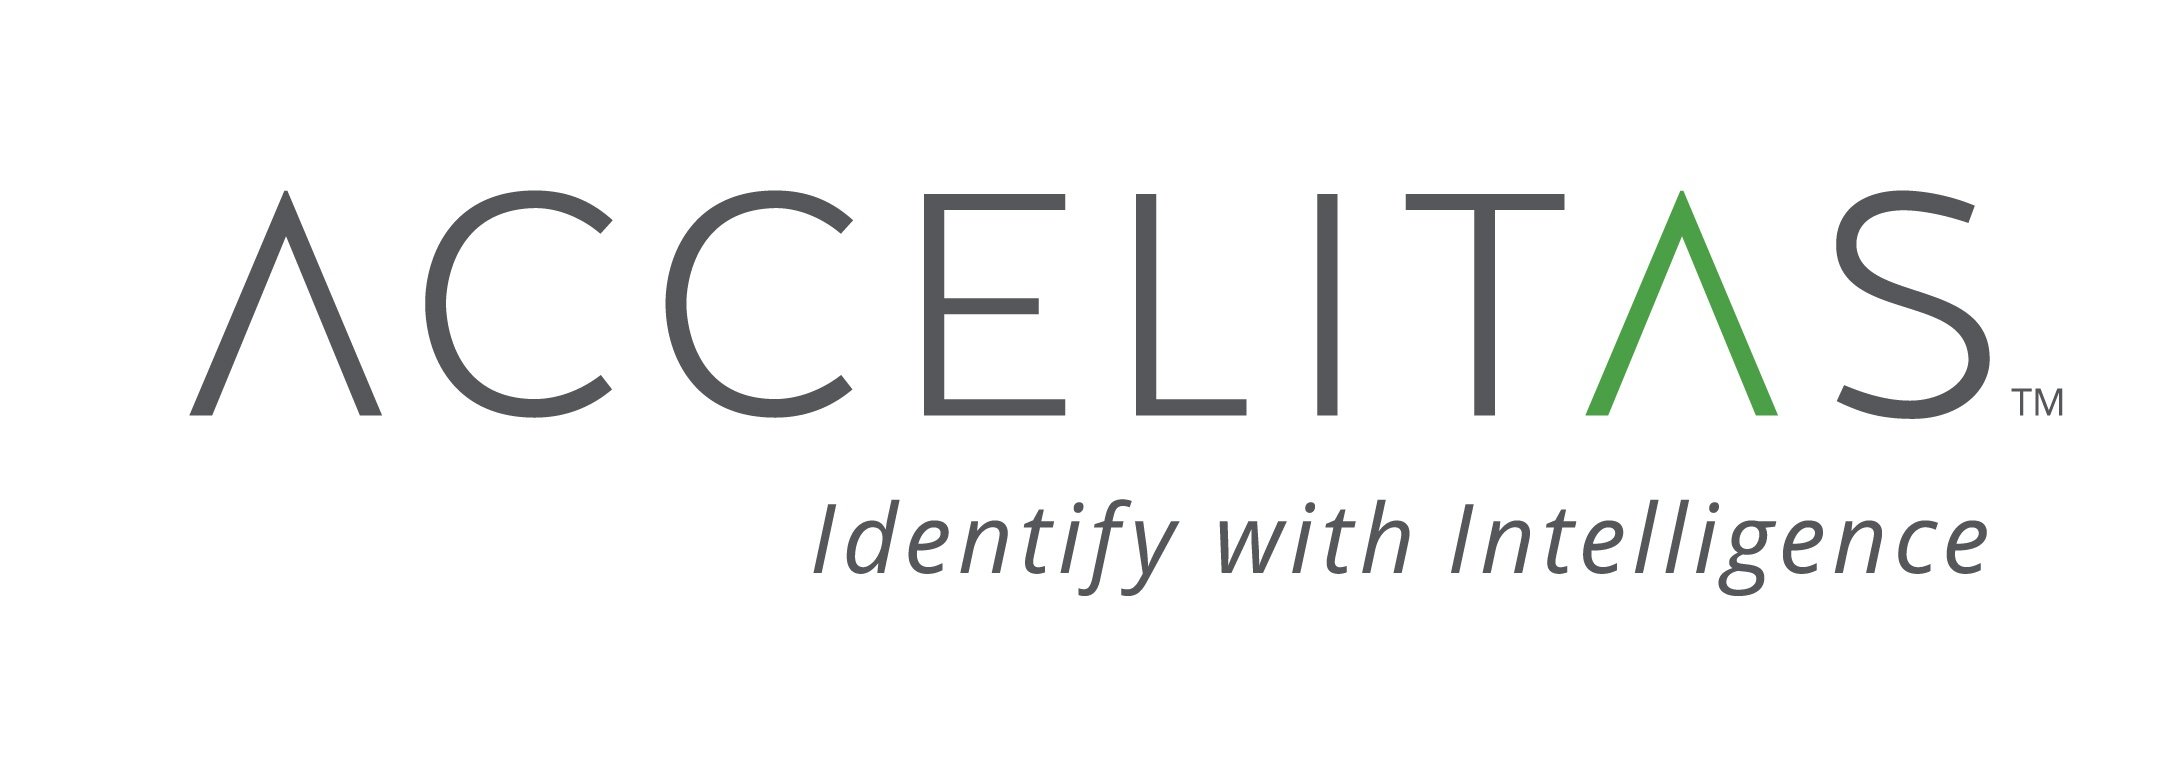 Accelitas Logo w-tagline.jpg